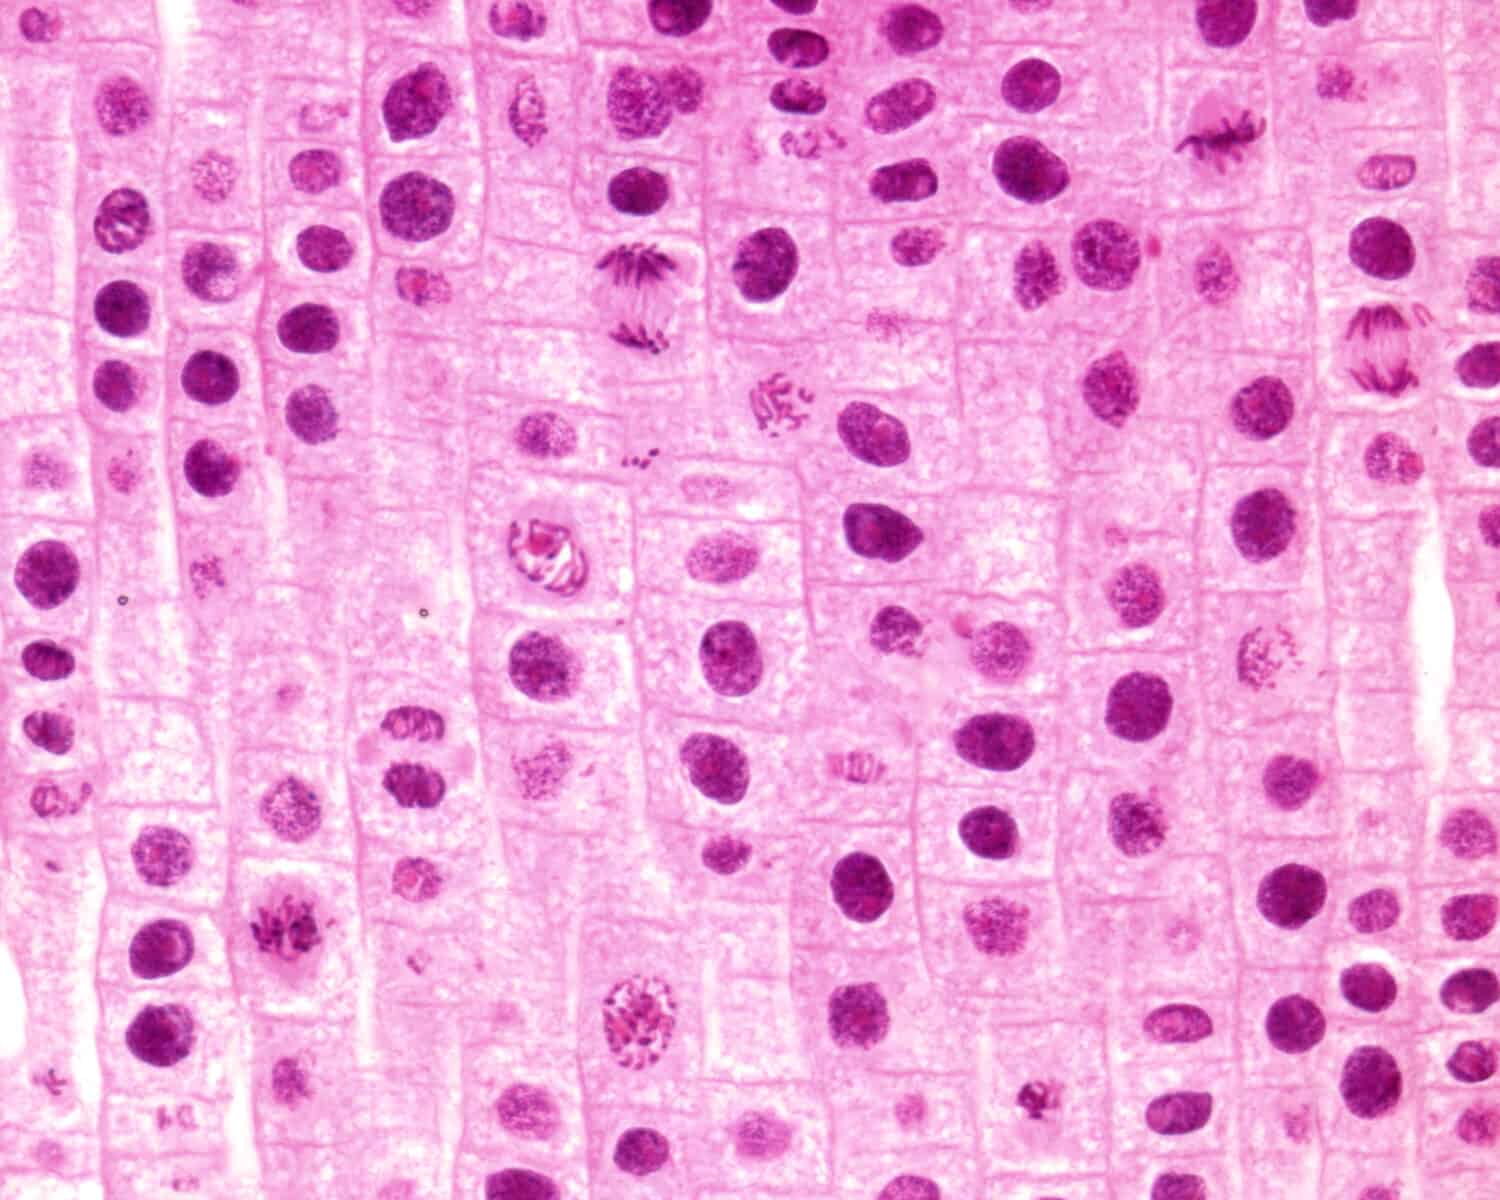 anaphase under microscope